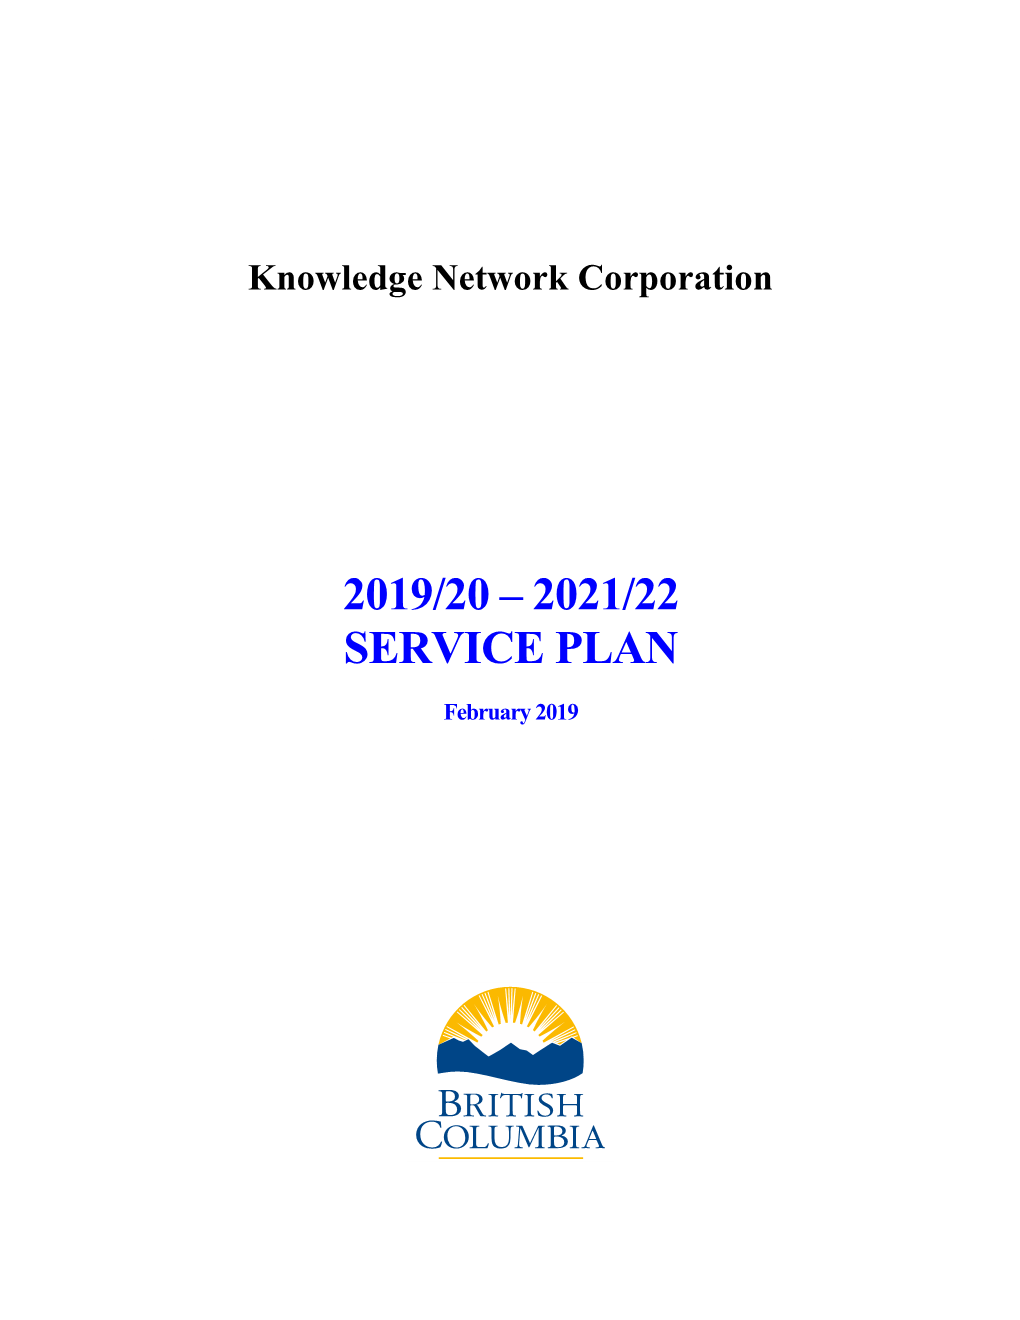 Knowledge Network Corporation 2019/20